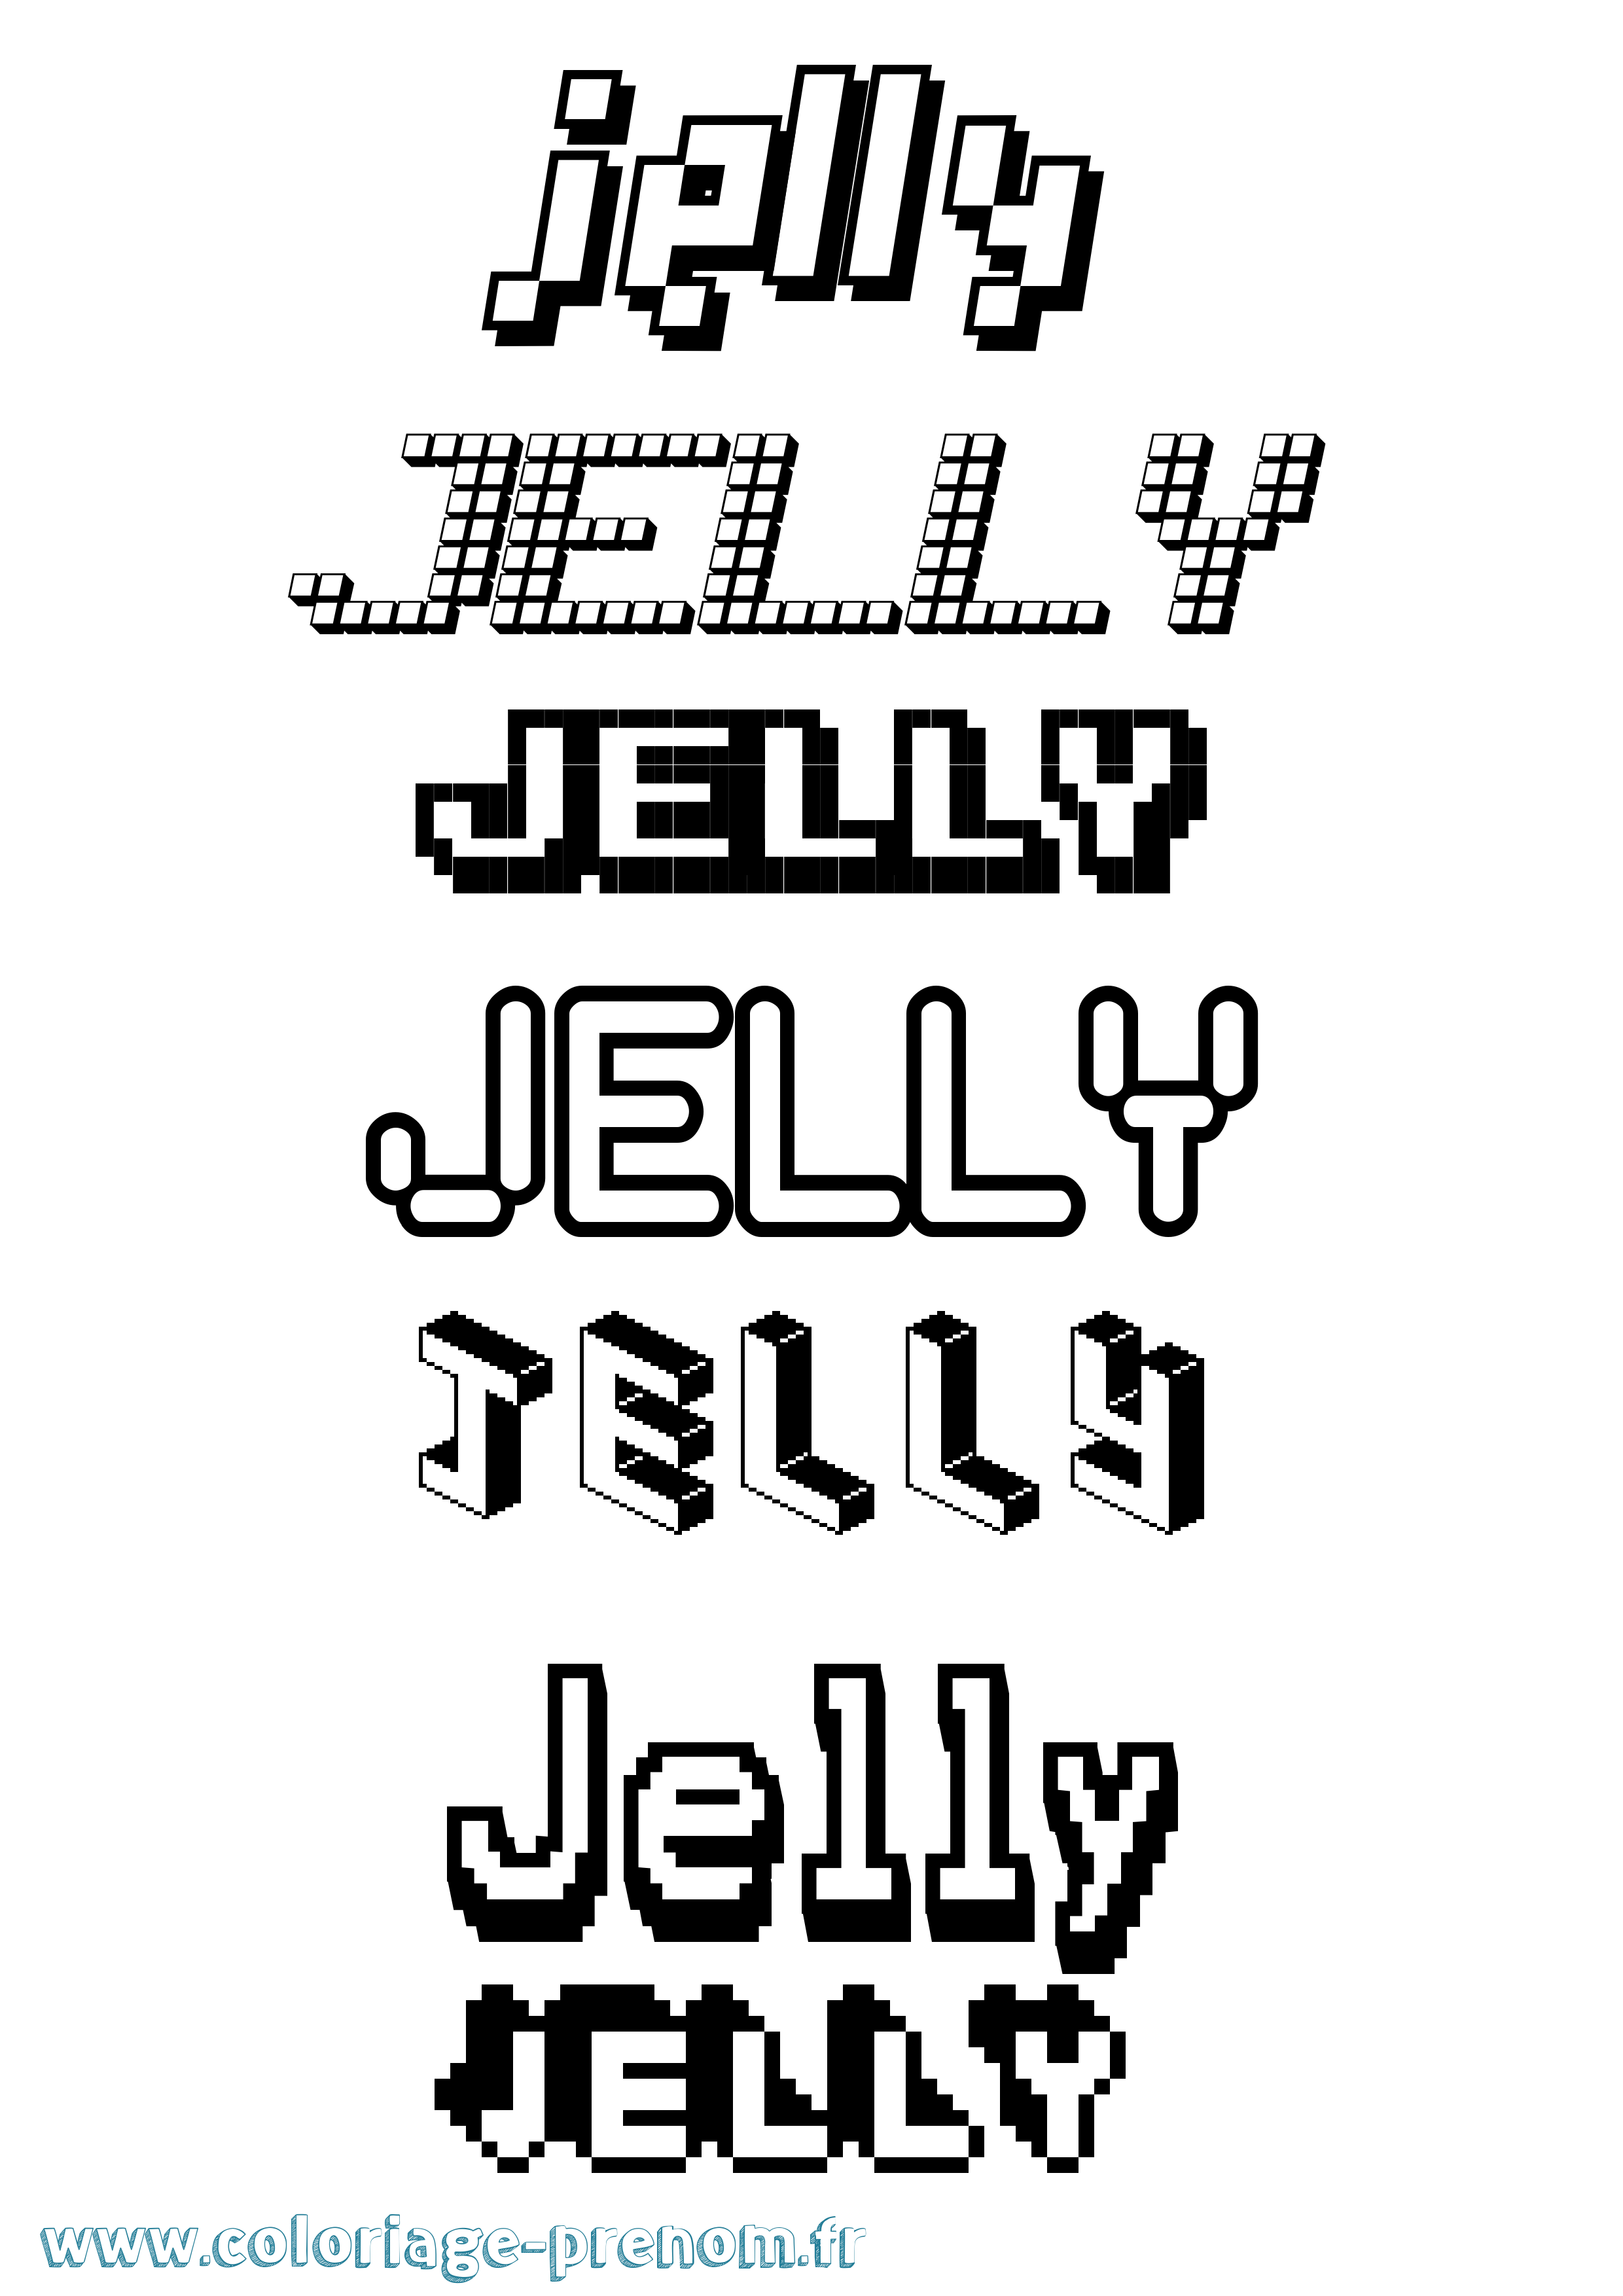 Coloriage prénom Jelly Pixel